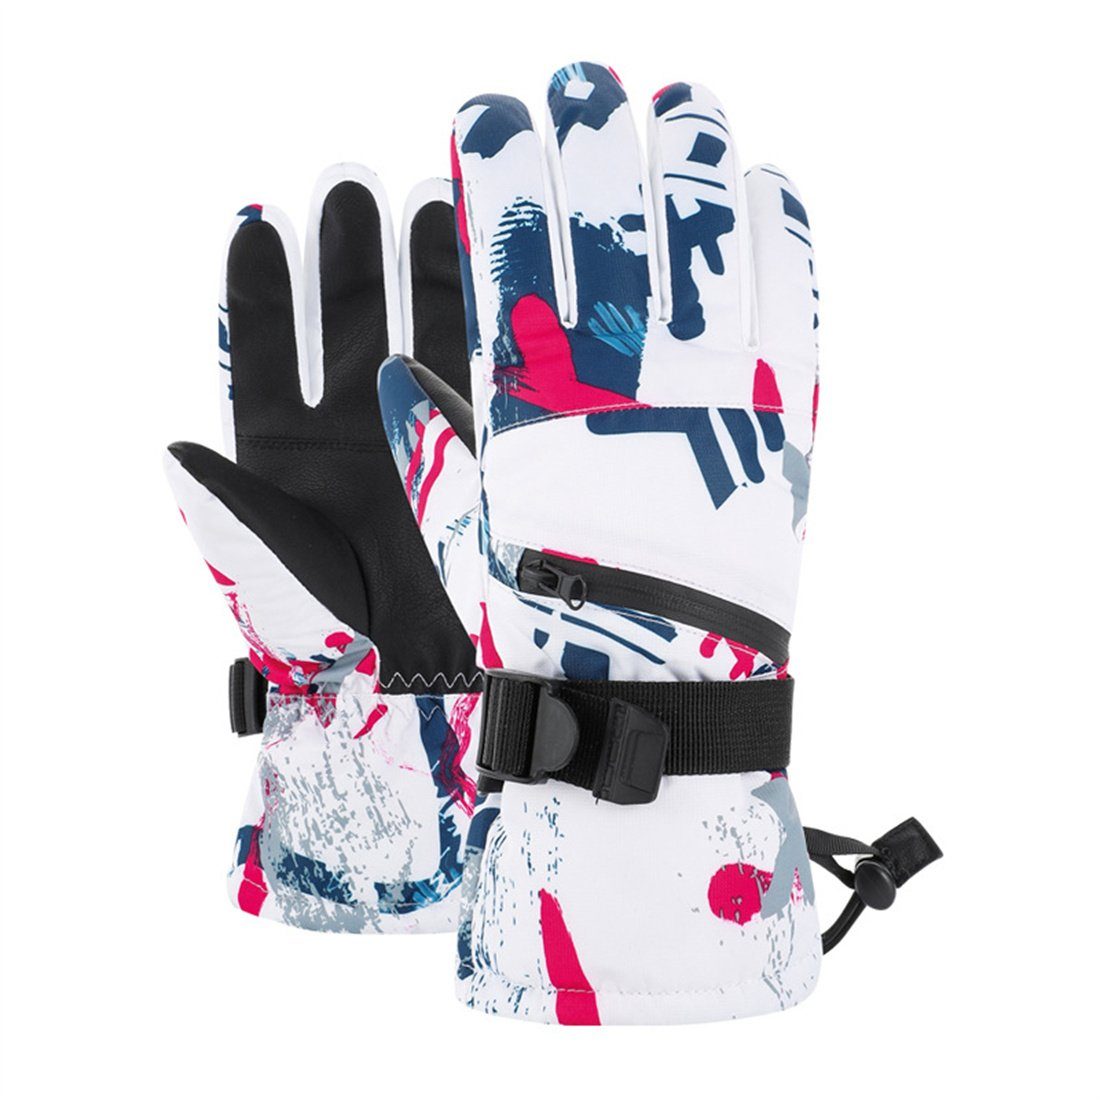 DÖRÖY Skihandschuhe Winter-Skihandschuhe für Erwachsene, verdickte warme Handschuhe,unisex B